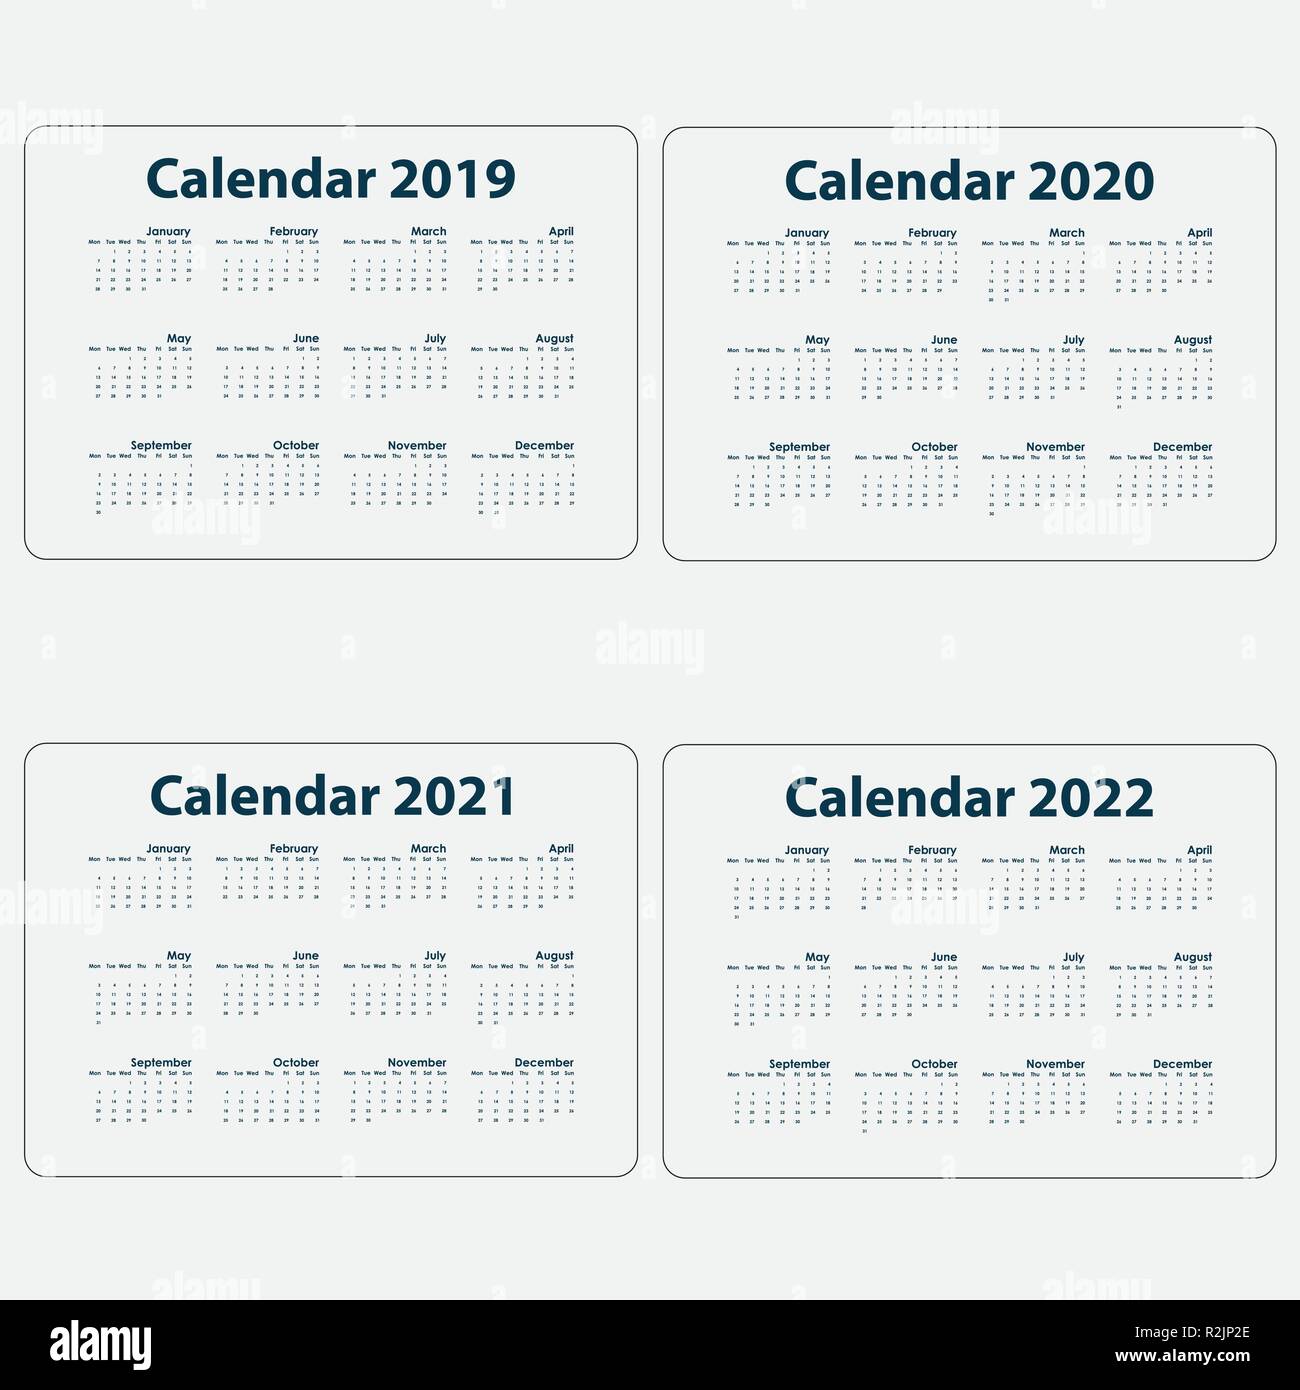 ala calendar 2021 2022 Calendar 2019 Calendar 2020 Calendar 2021 And 2022 Template Calendar Design Yearly Calendar Vector Design Stationery Template Vector Illustration Stock Vector Image Art Alamy ala calendar 2021 2022